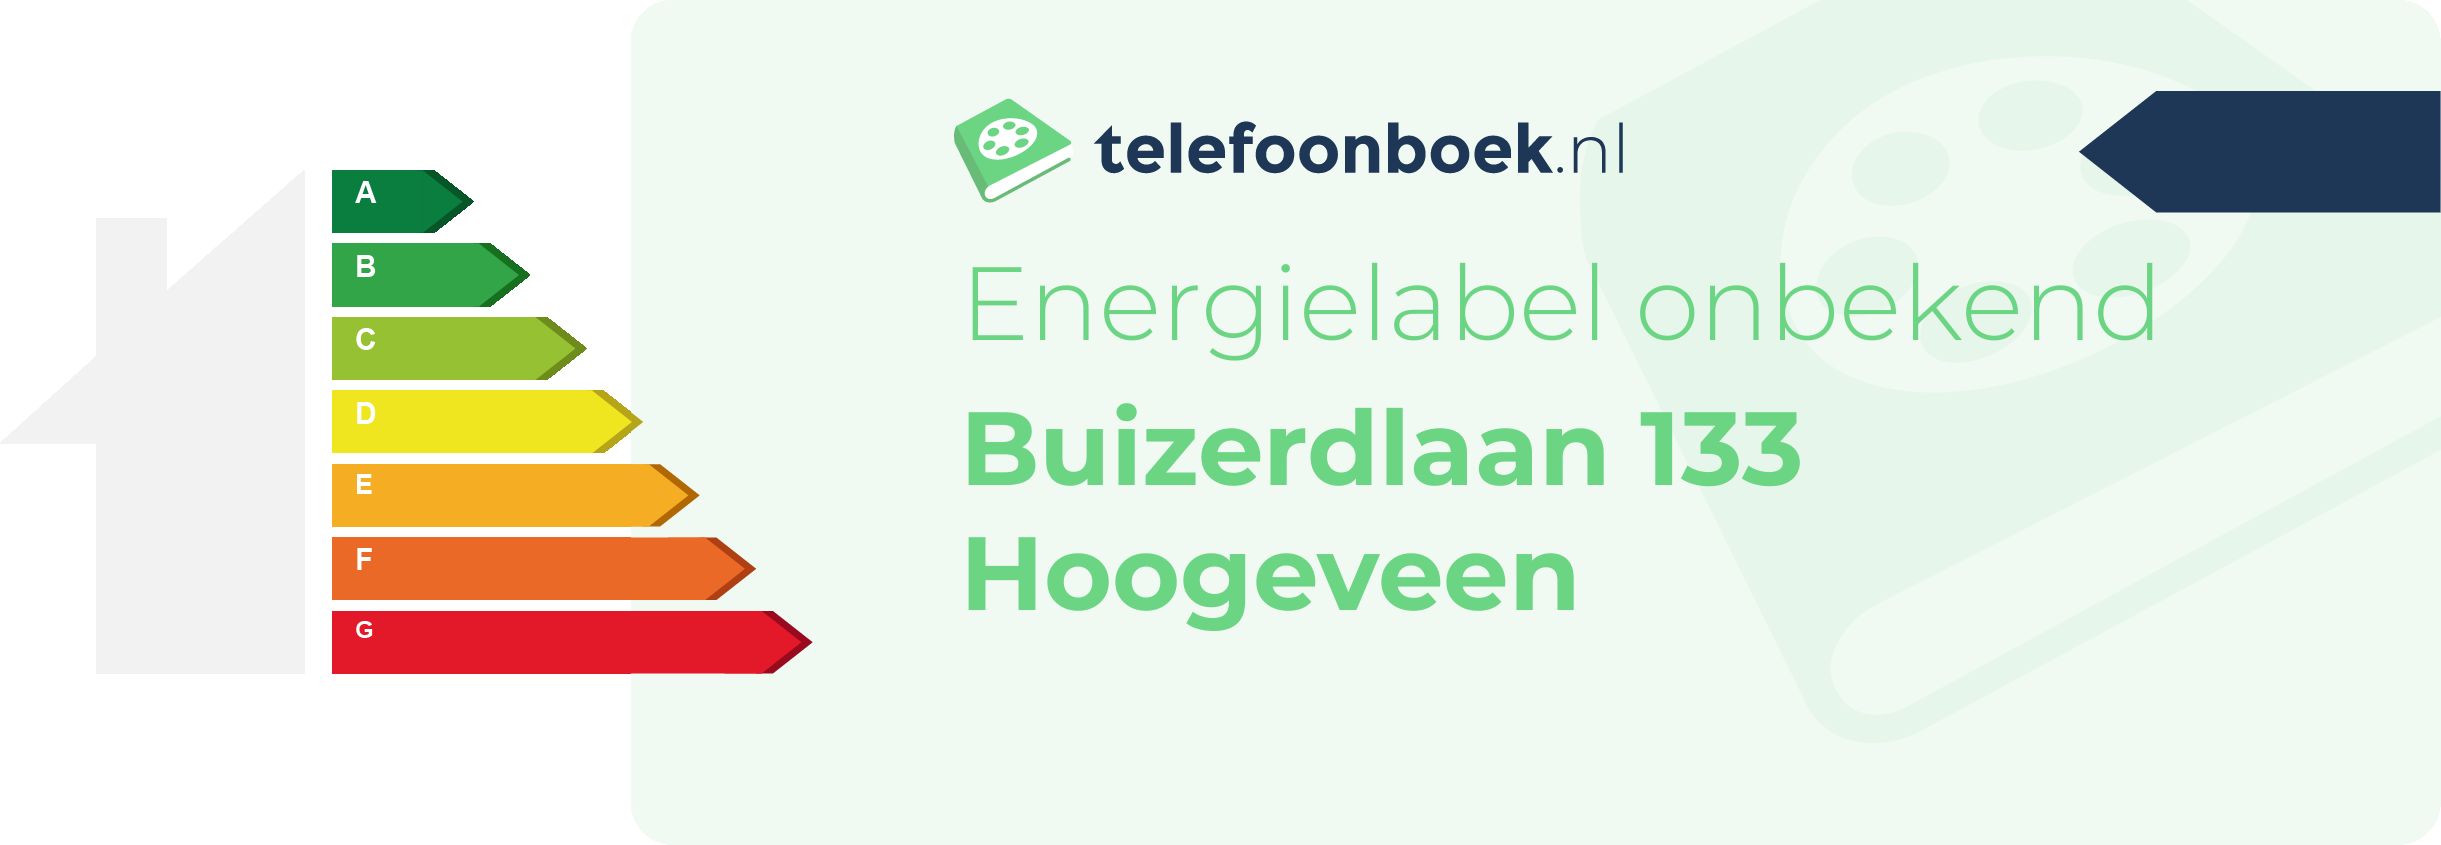 Energielabel Buizerdlaan 133 Hoogeveen